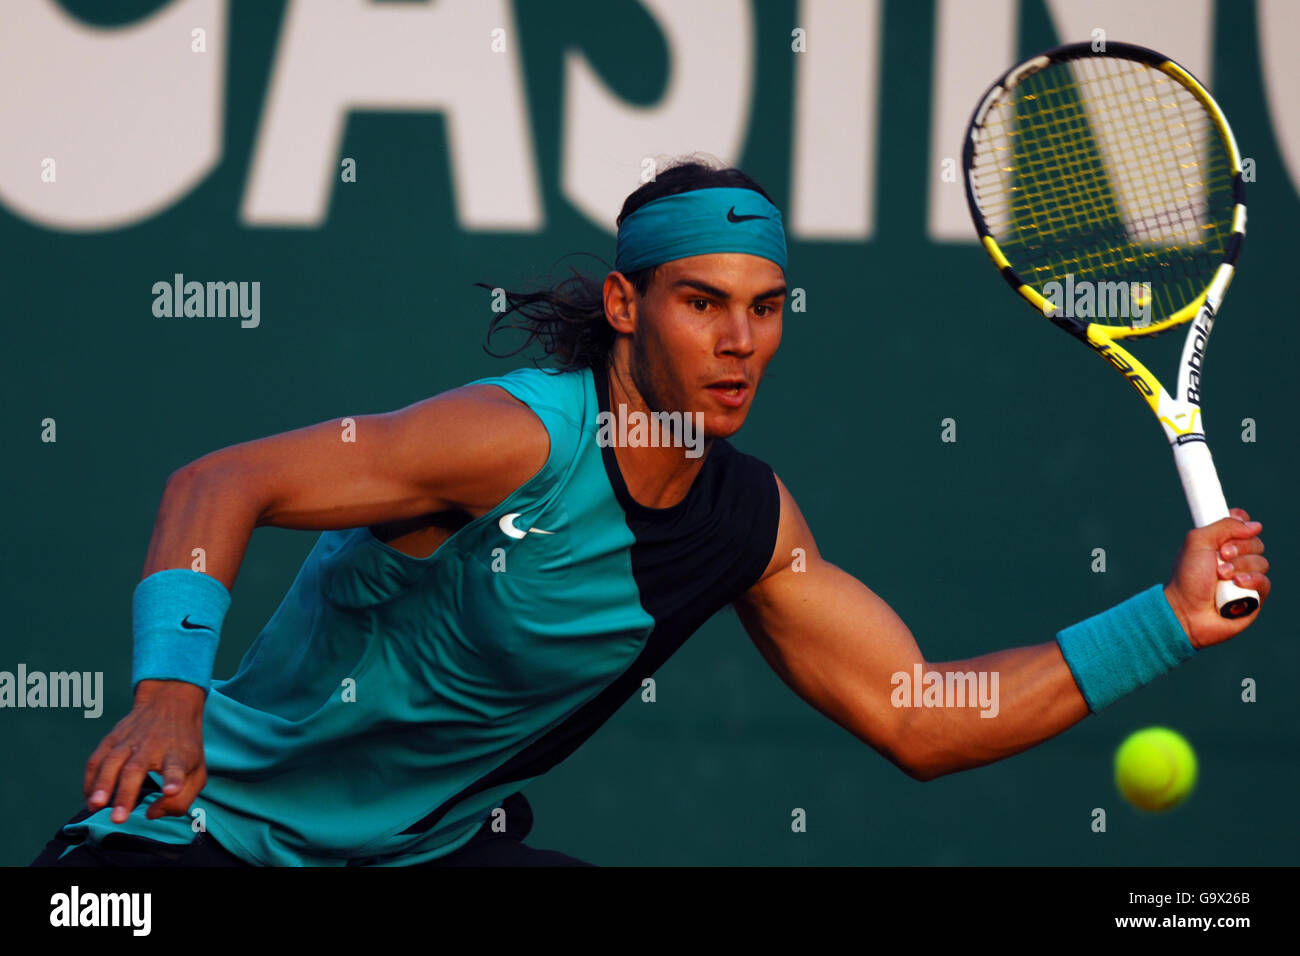 tennis - ATP Masters Series - Quarter Final - Rafael Nadal v Philipp Kohlschreiber - Monte Carlo. Rafael Nadel, Spain Stock Photo